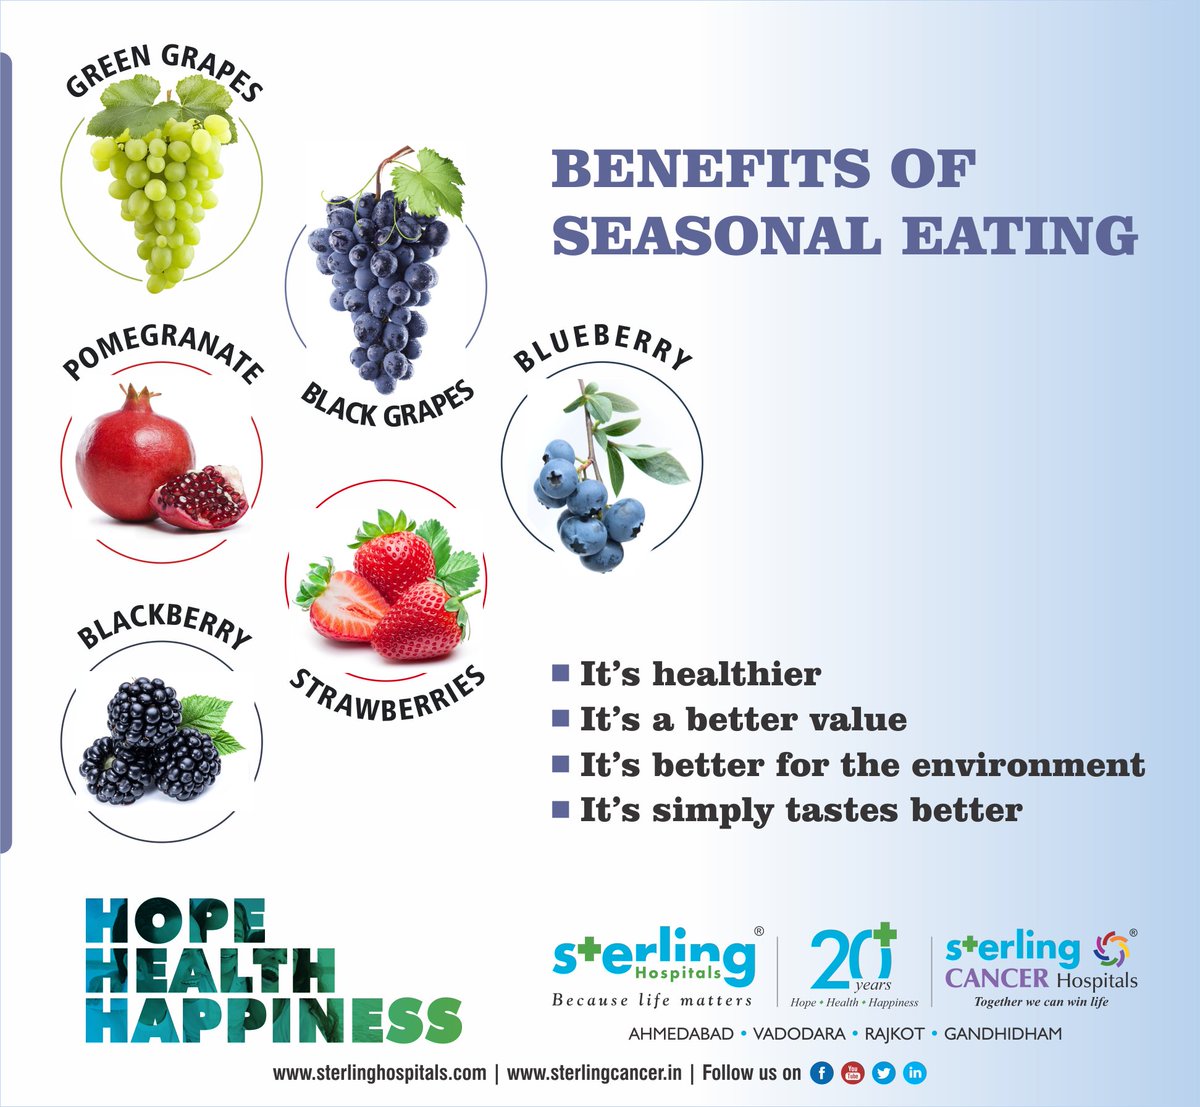 #Benefits of #seasonal #eating.
#goodfood  #goodhealth 
#fruits 
#greengrapes #pomegranate 
#blackberry #Blueberry #blackgrapes 
#strawberries 
#sterlinghospital #hope #health #happiness
#SterlingCancerHospitals